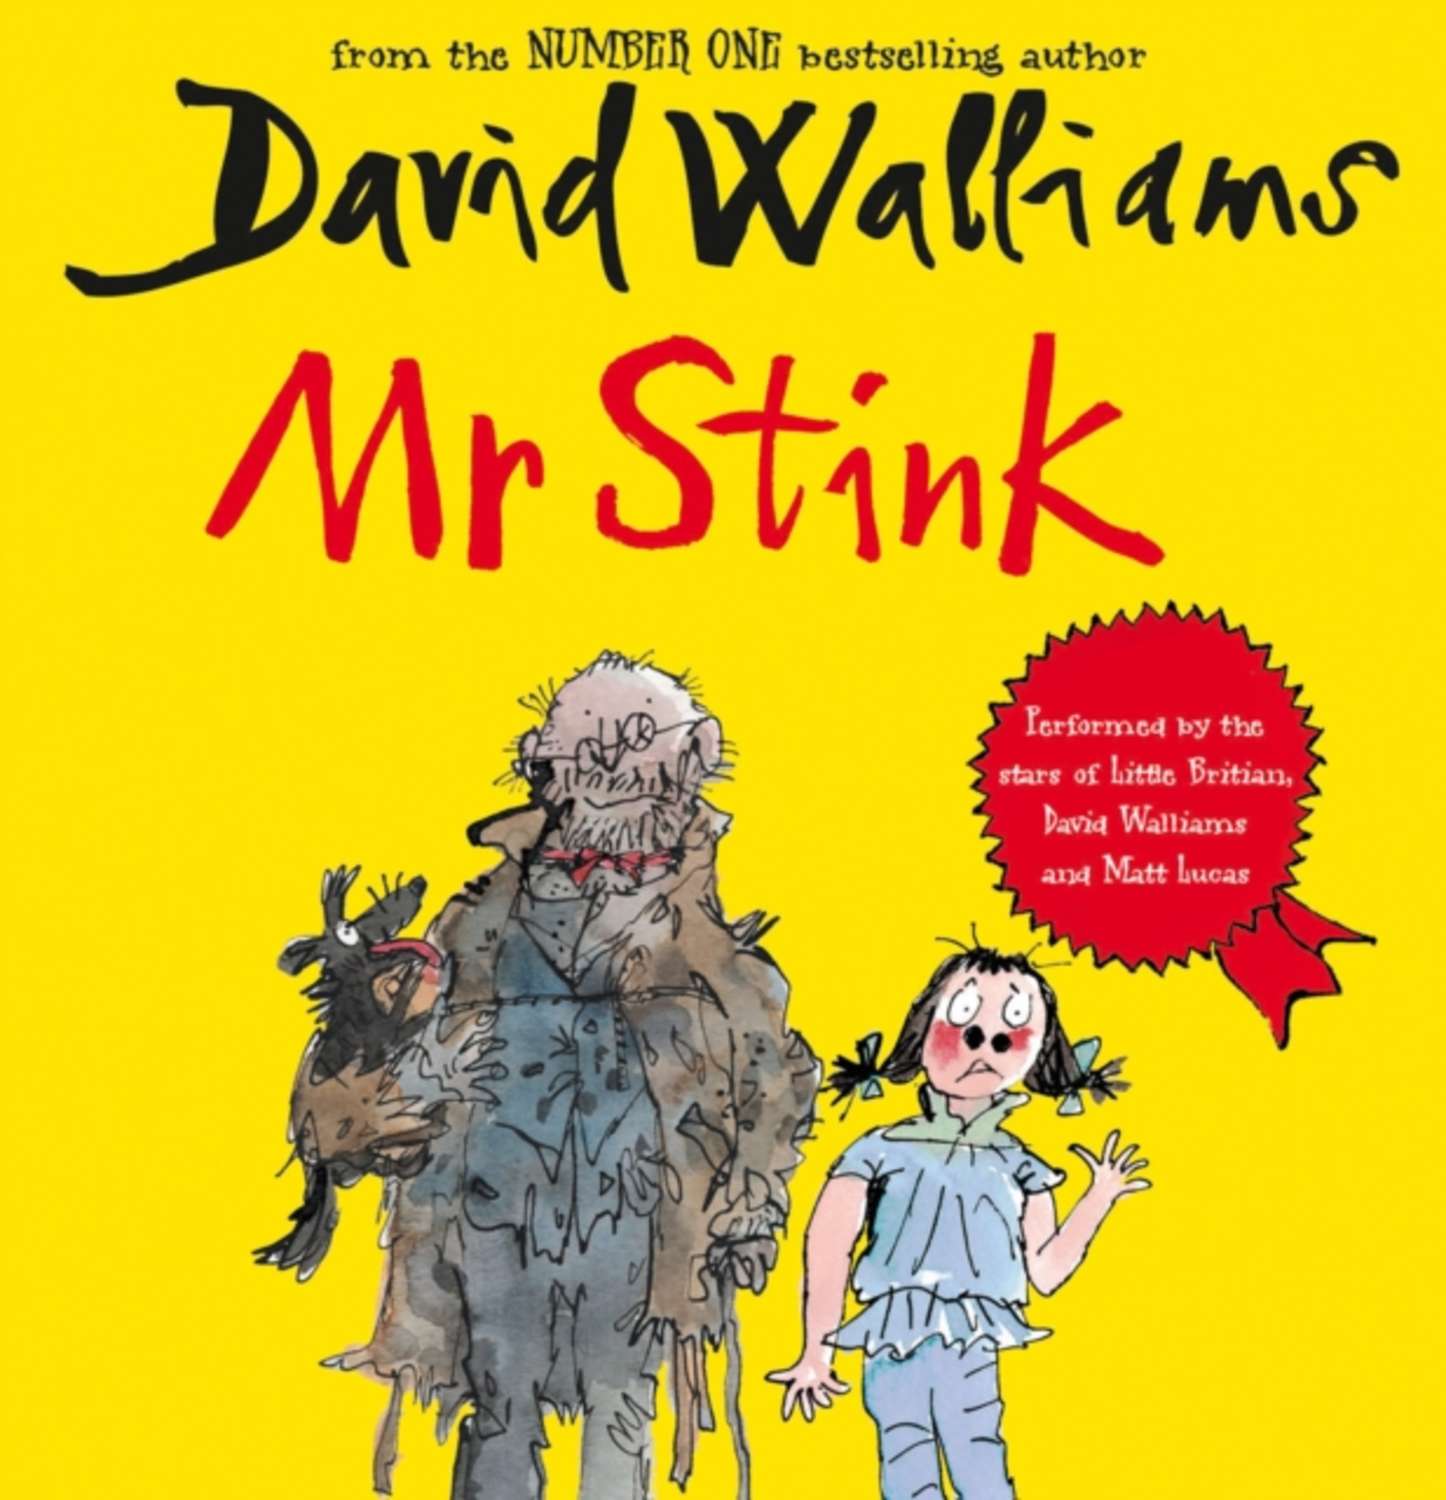 David Walliams Audiobook Mr Stink download in mp3 at Litres